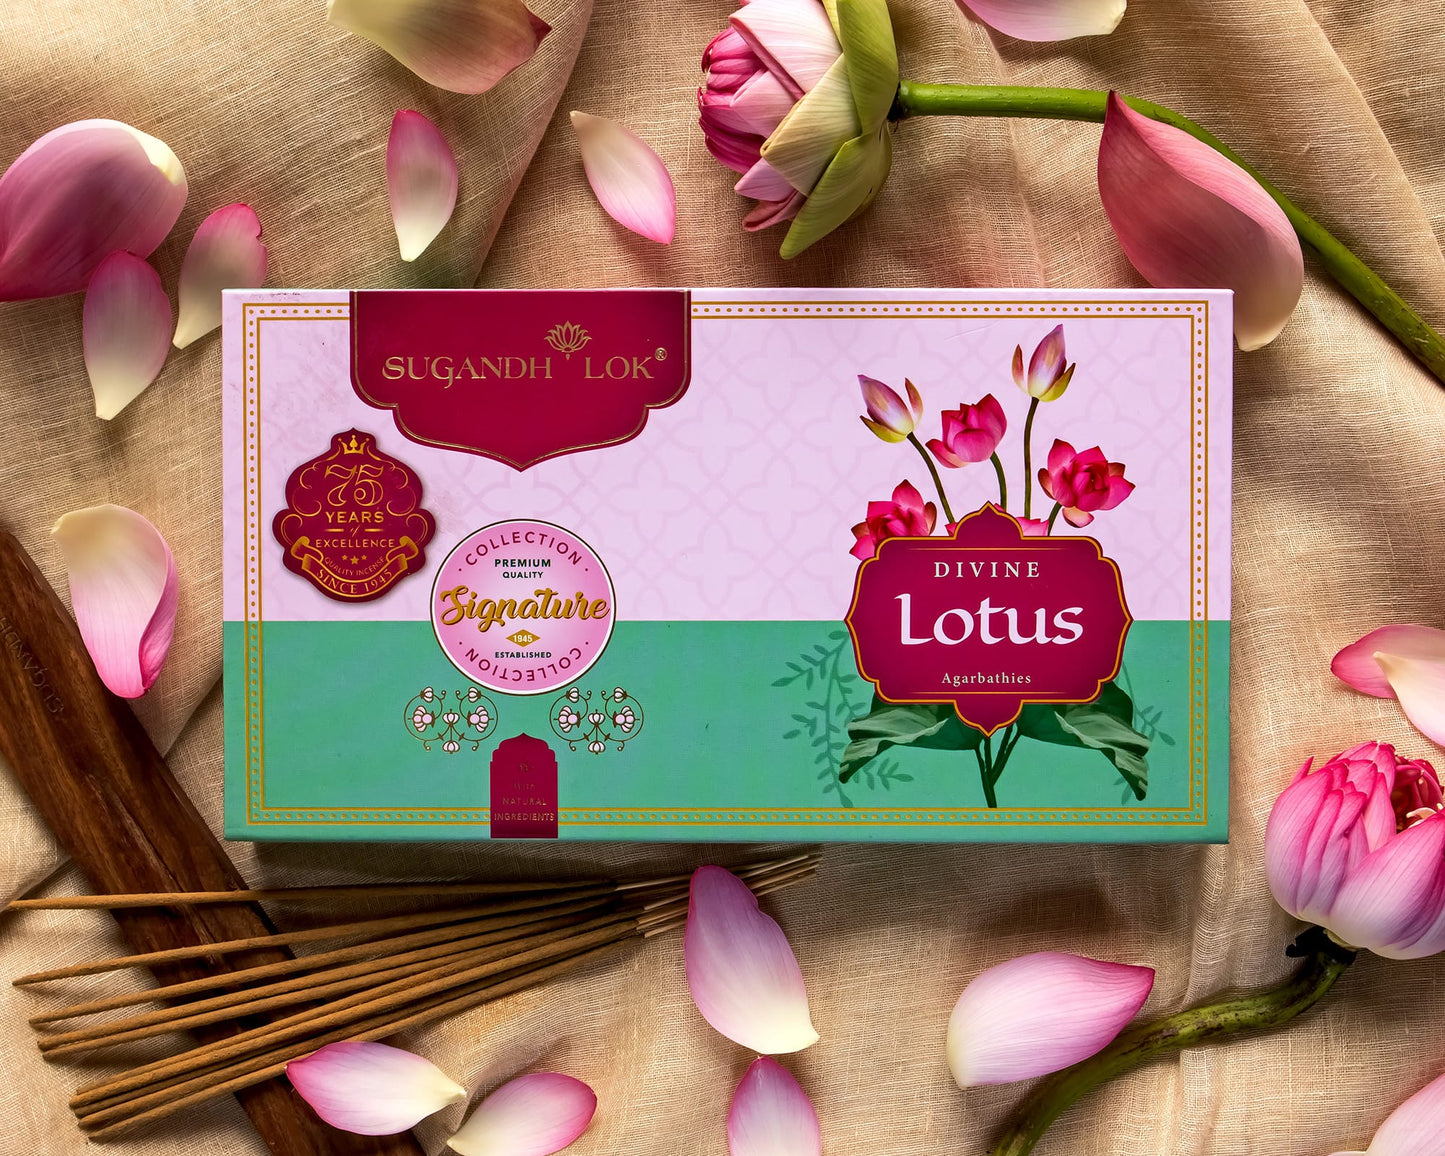 Divine Lotus Agarbatti Box surrounded by lotus flowers and lotus petals